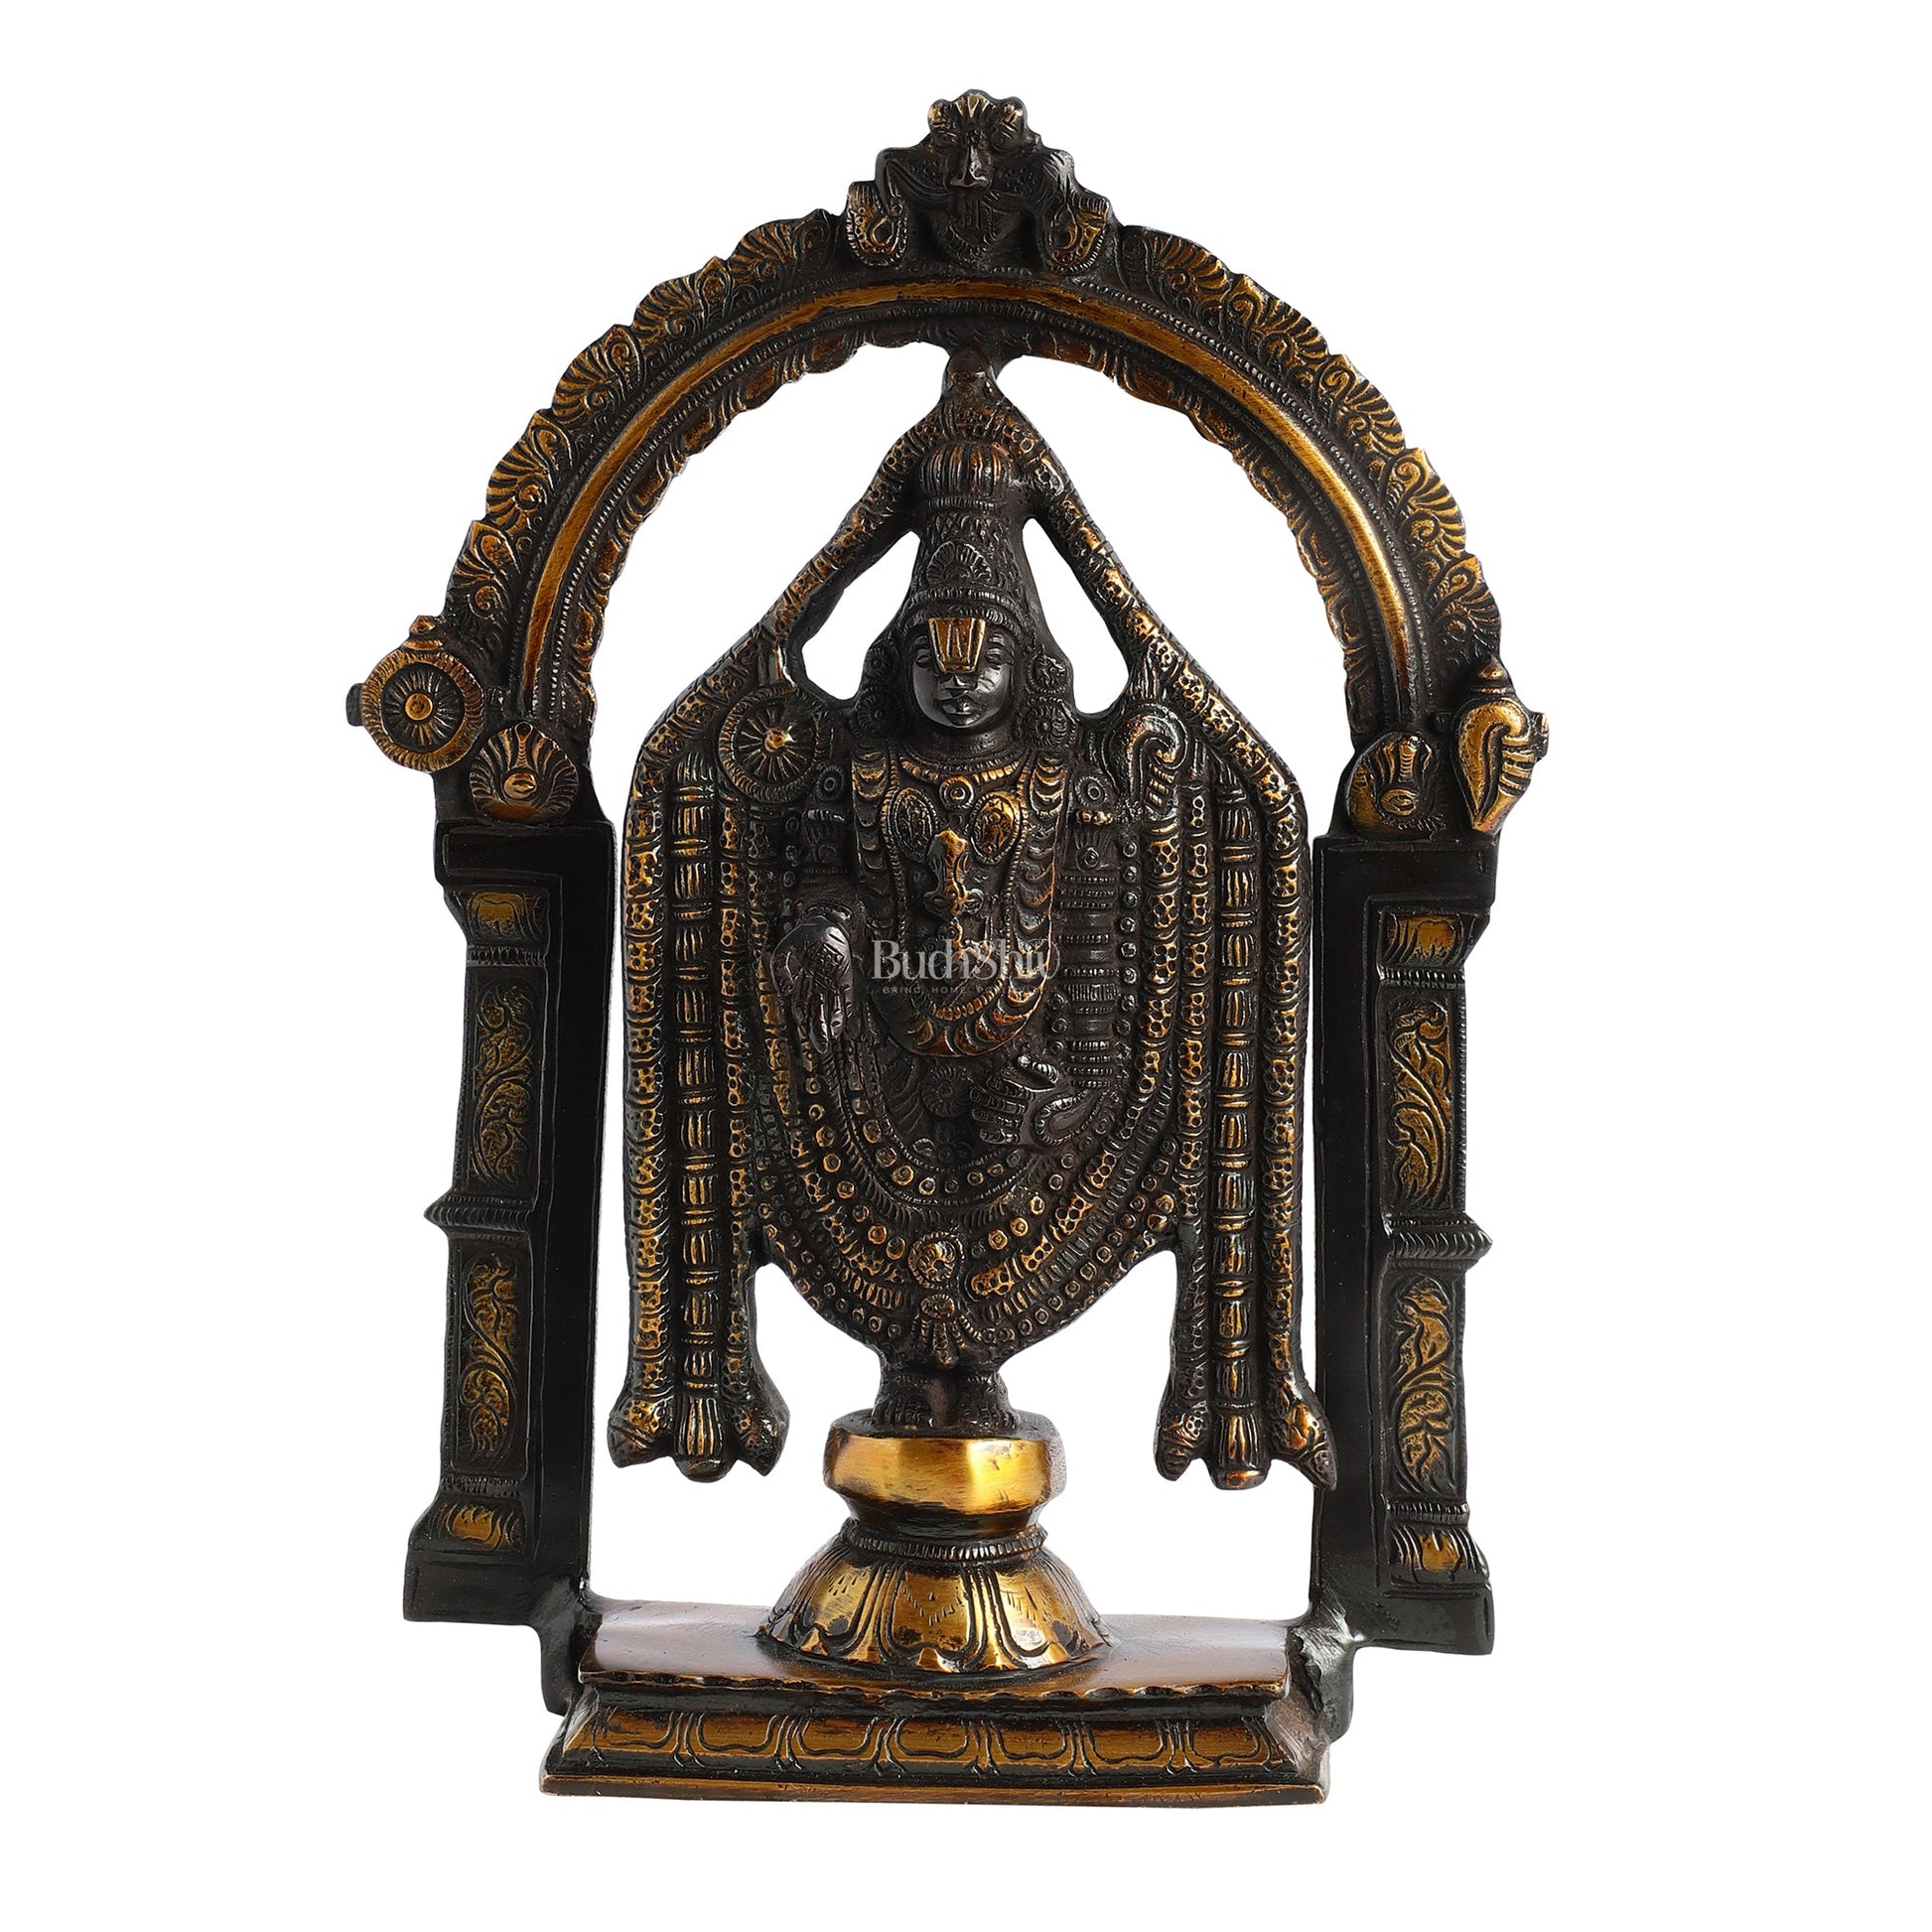 Superfine Brass Tirupati Balaji Lord Venkateshwara Swamy Idol - 13x9.5x3 Inch - Budhshiv.com